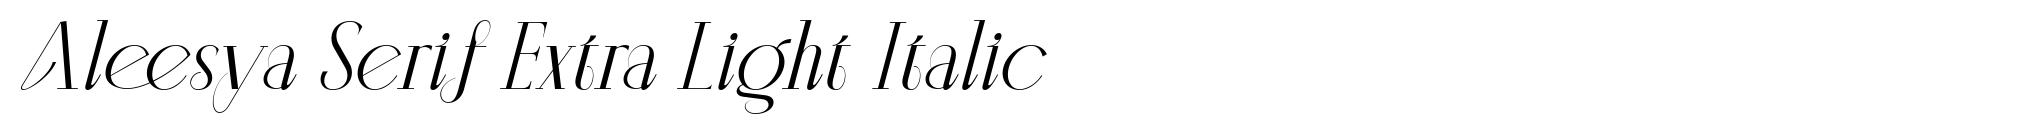 Aleesya Serif Extra Light Italic image